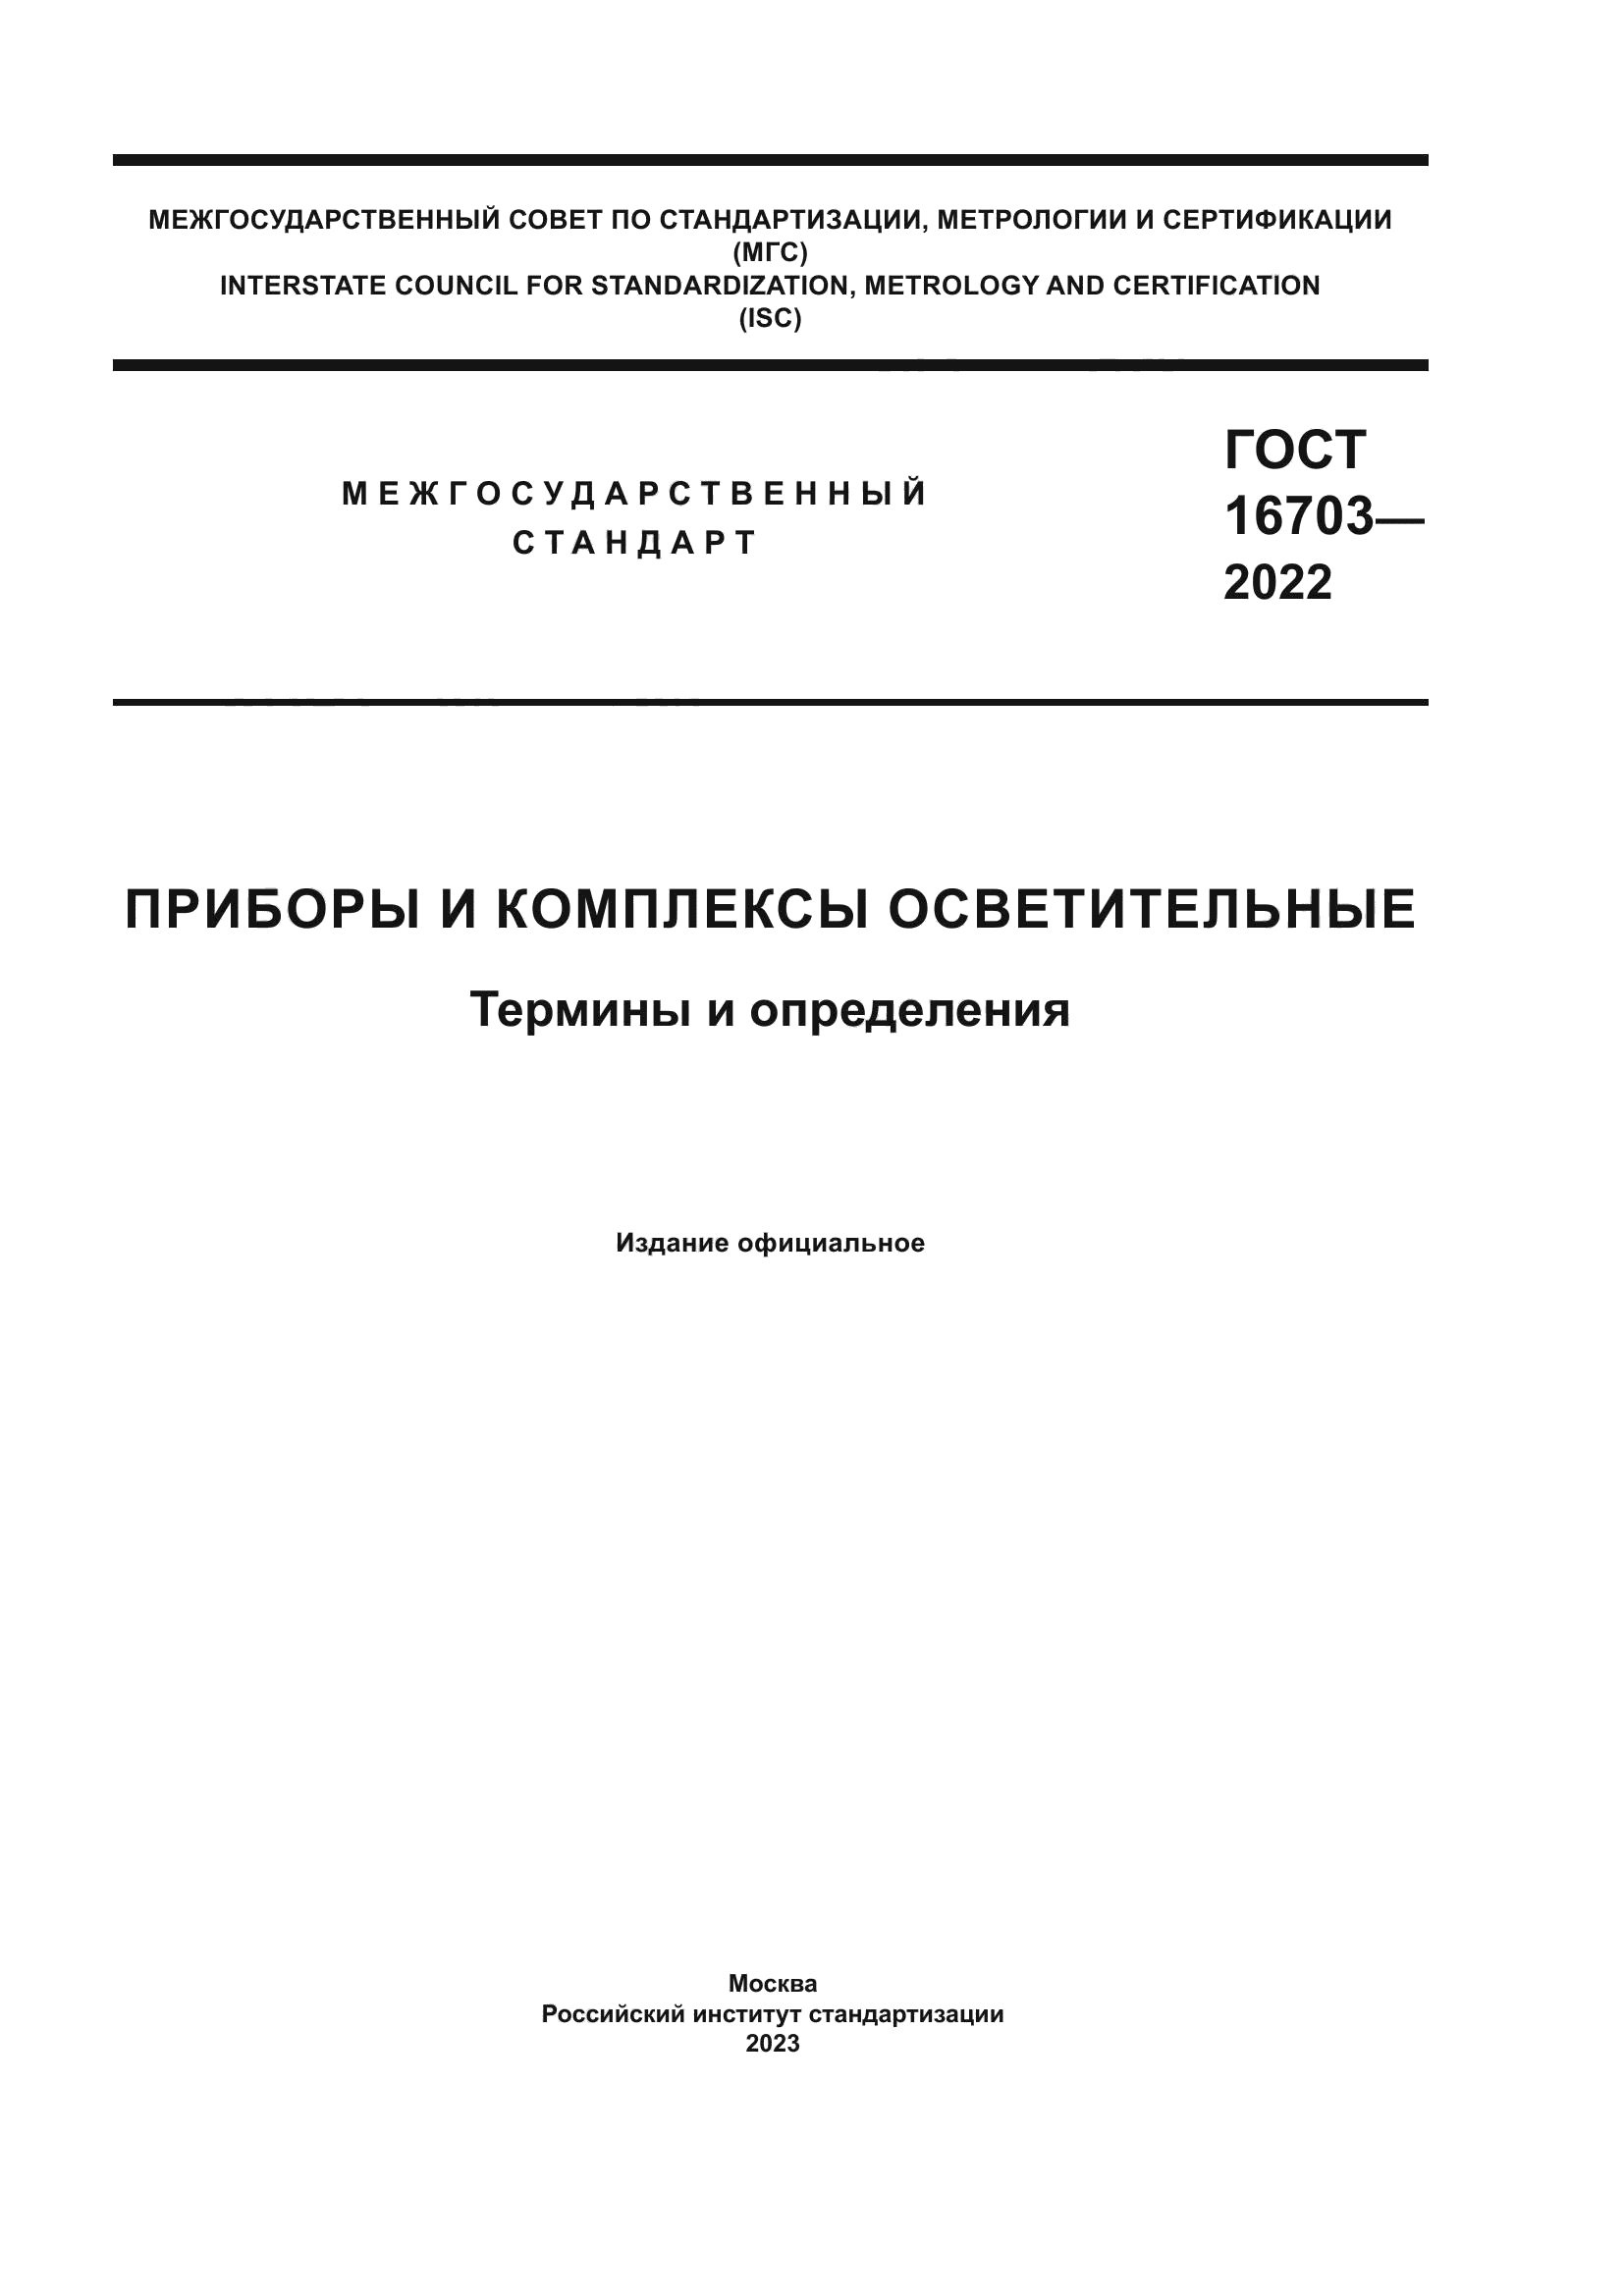 ГОСТ 16703-2022